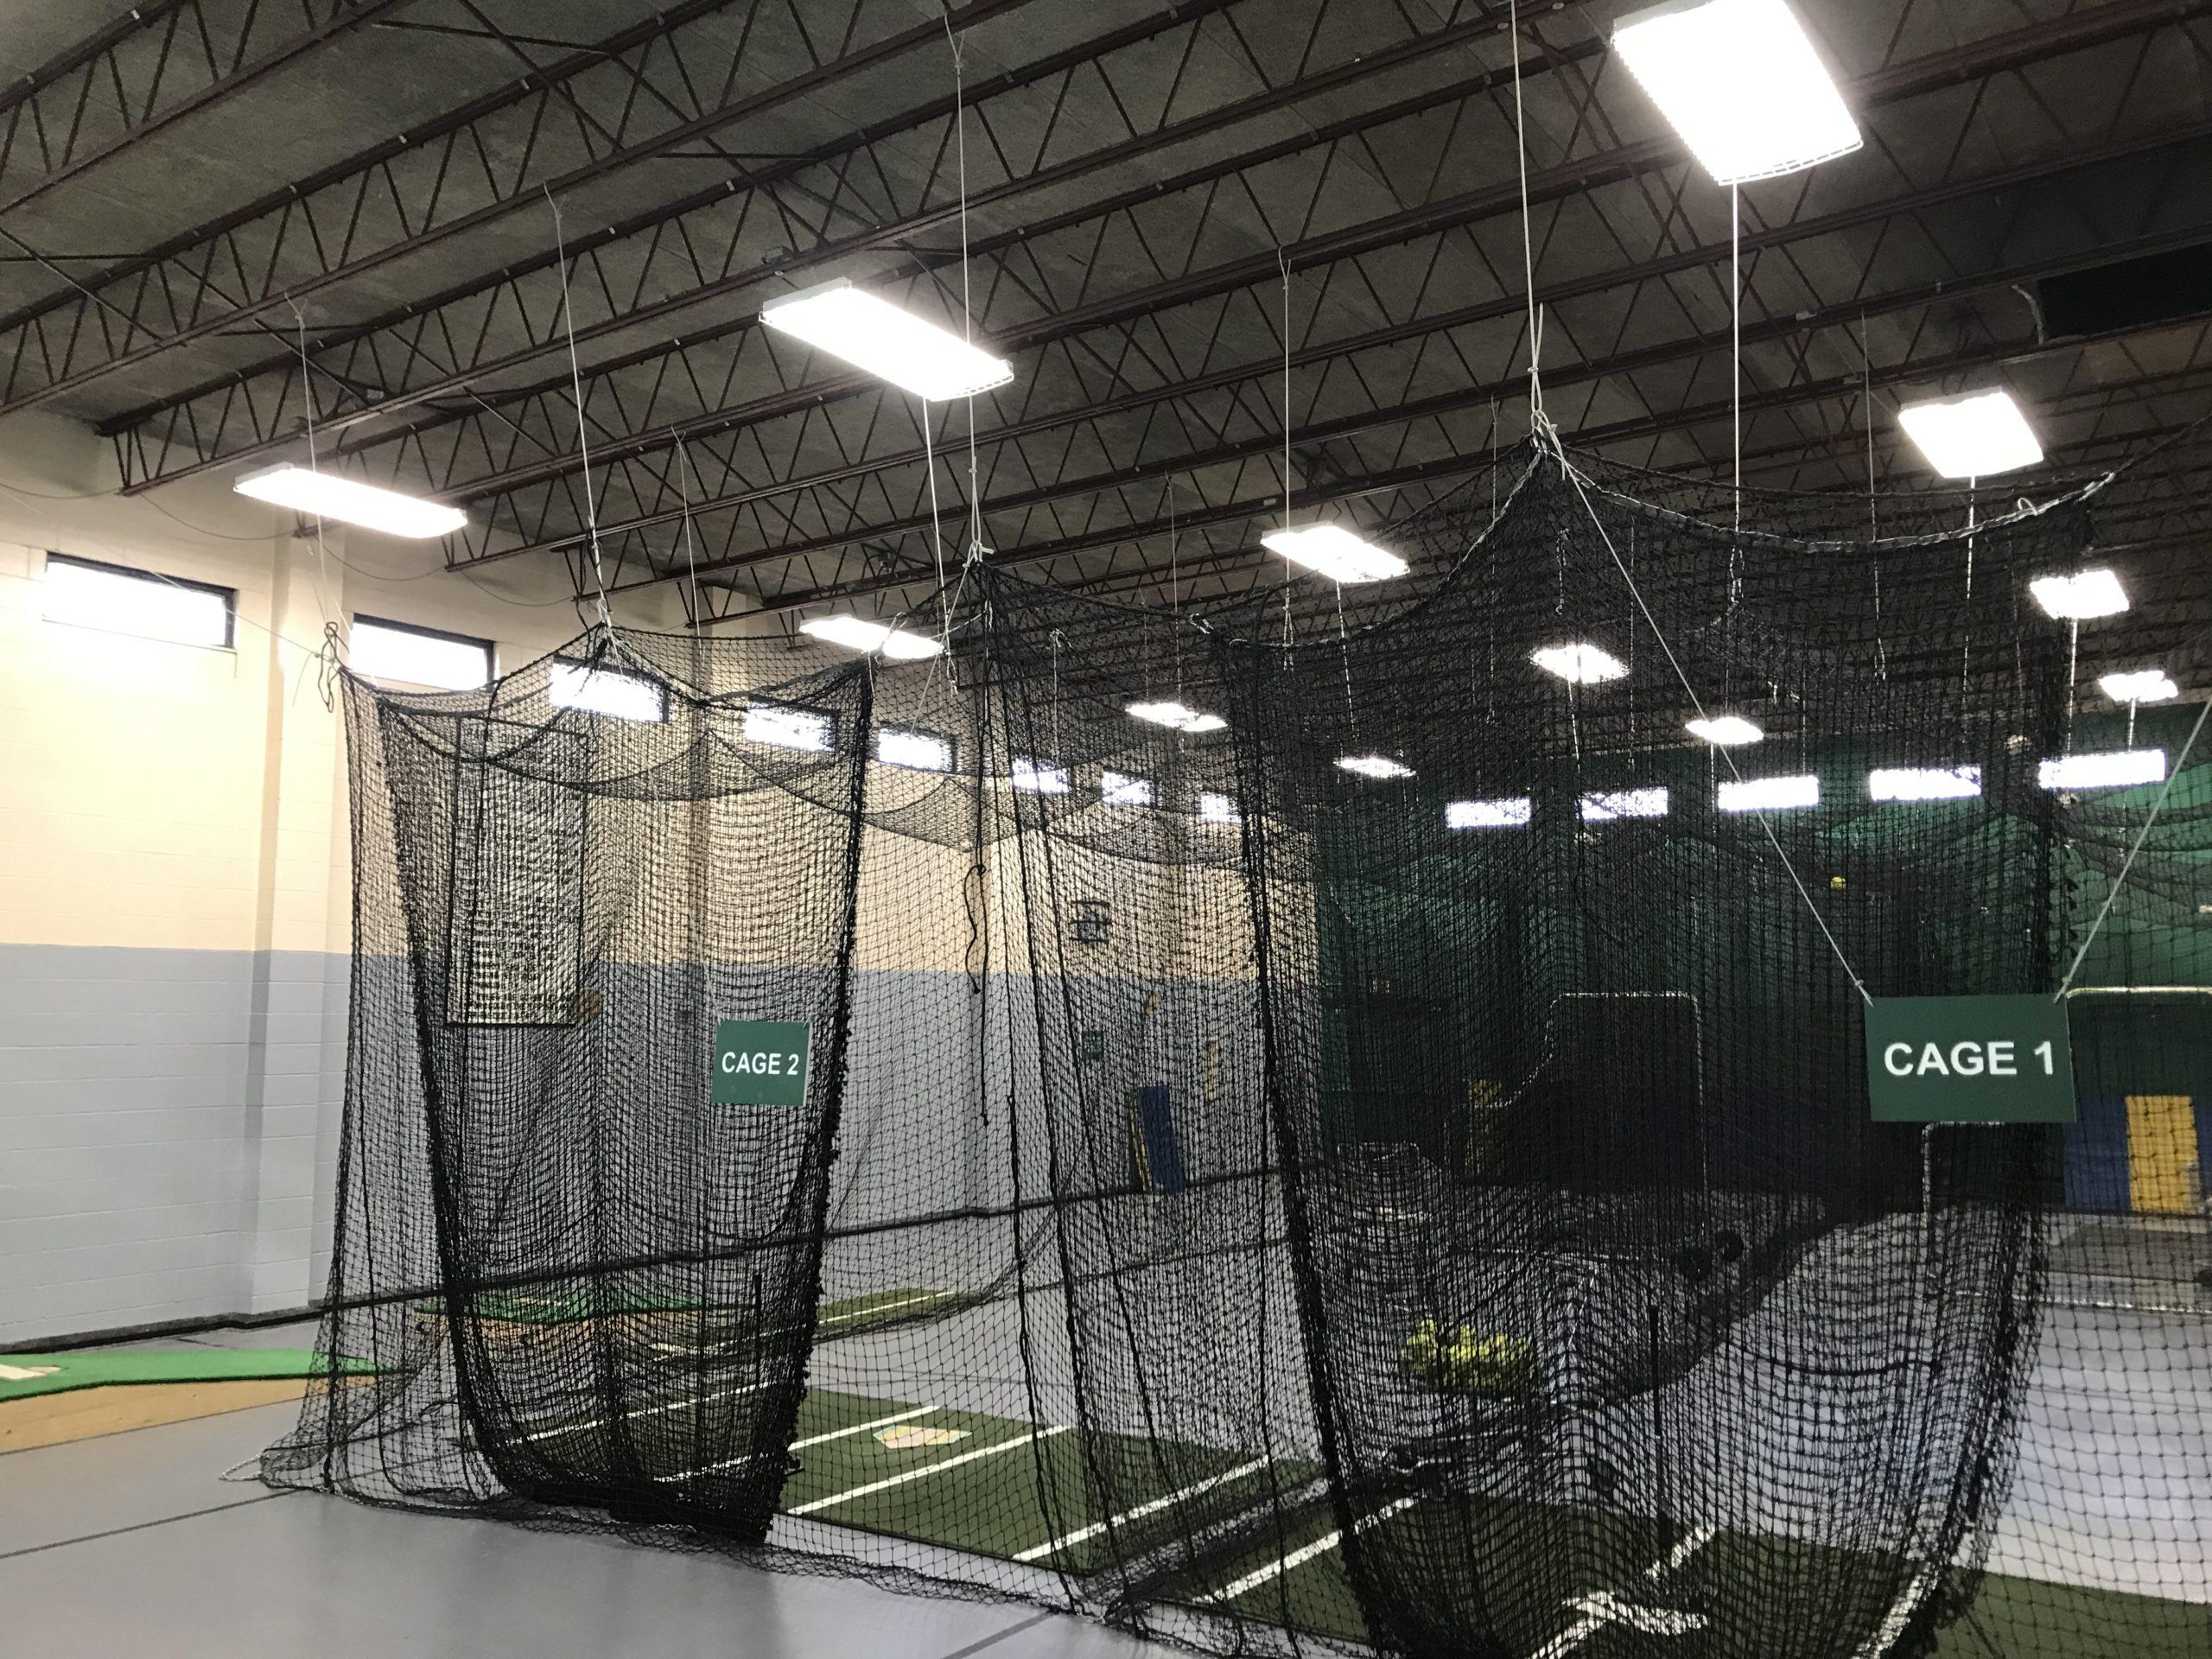 Indoor Batting Cages